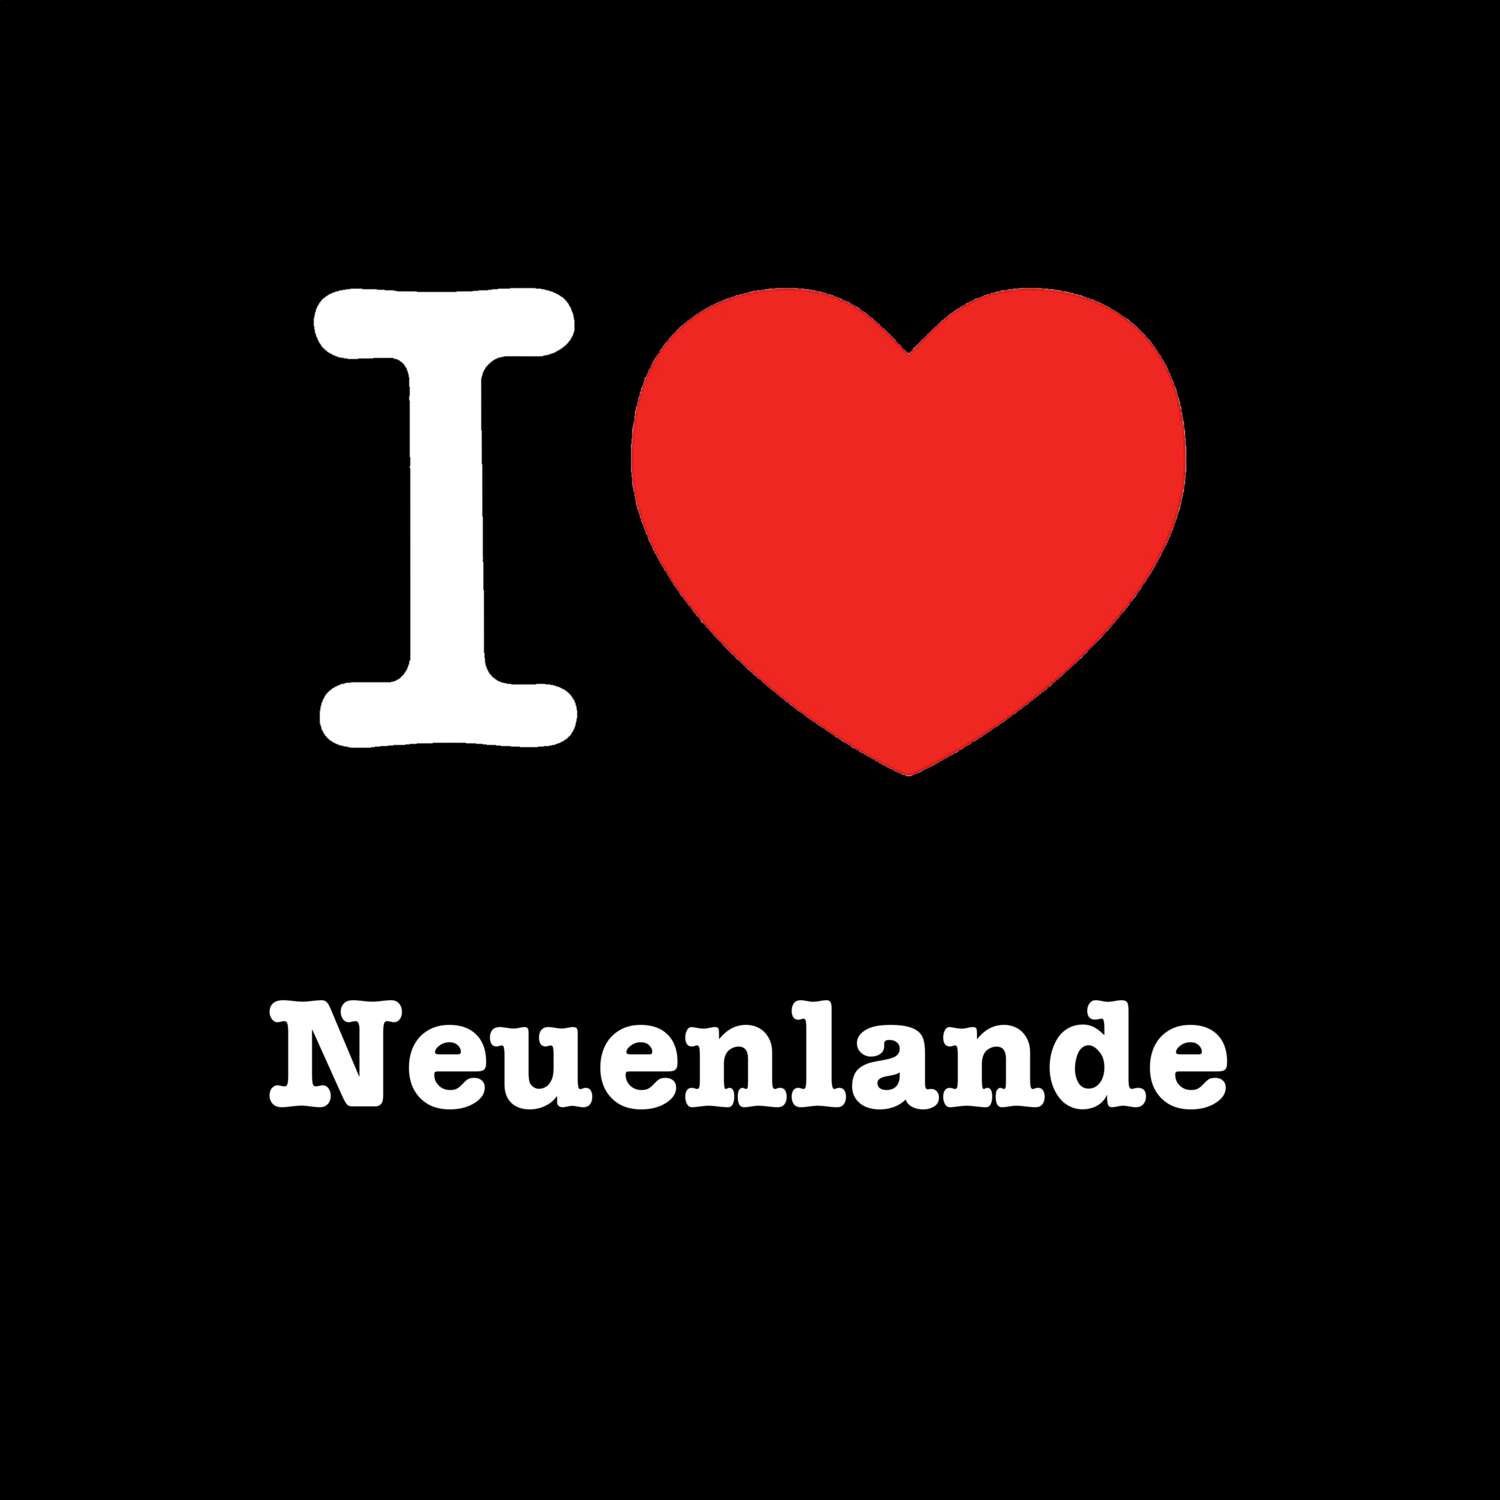 Neuenlande T-Shirt »I love«